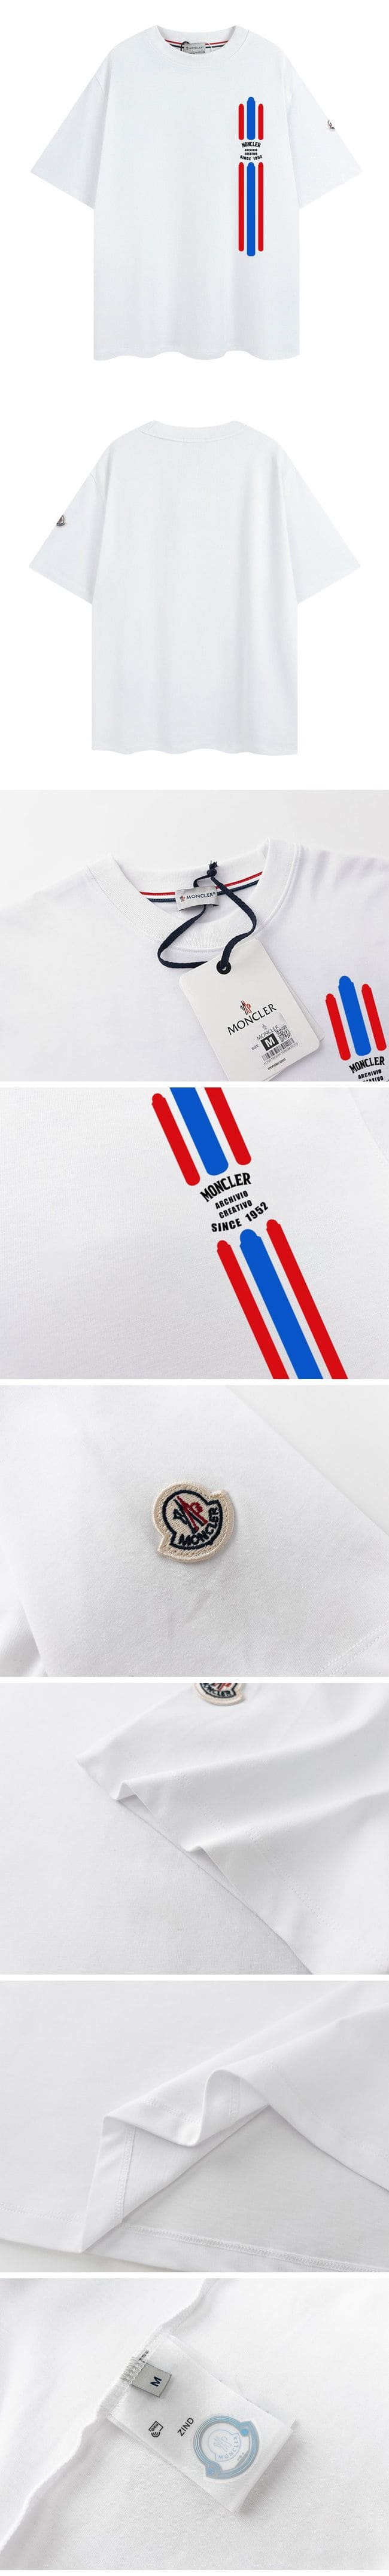 Moncler Line Print Tee モンクレール ラインデザイン Tシャツ ホワイト